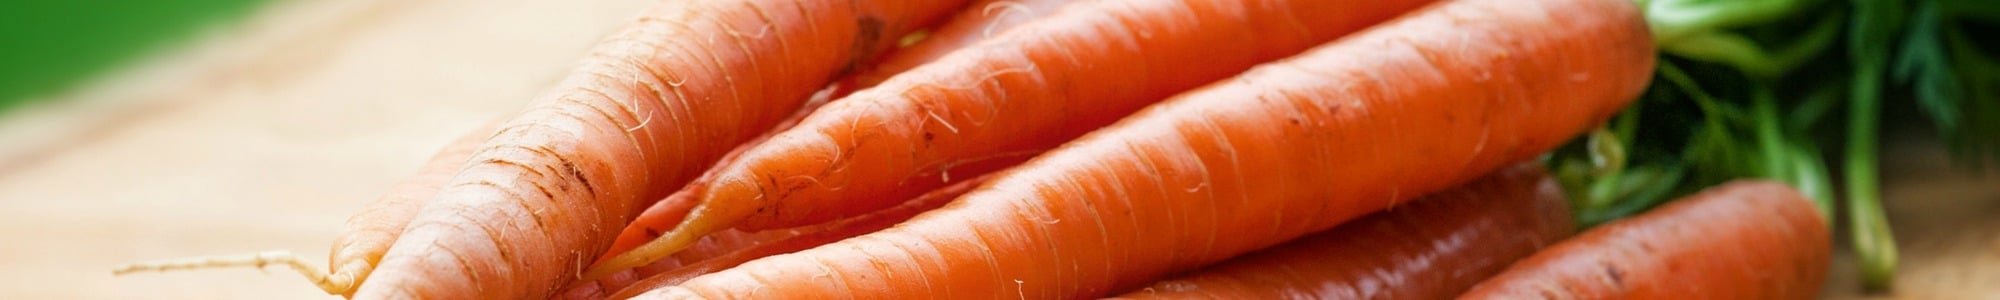 Carrots banner image